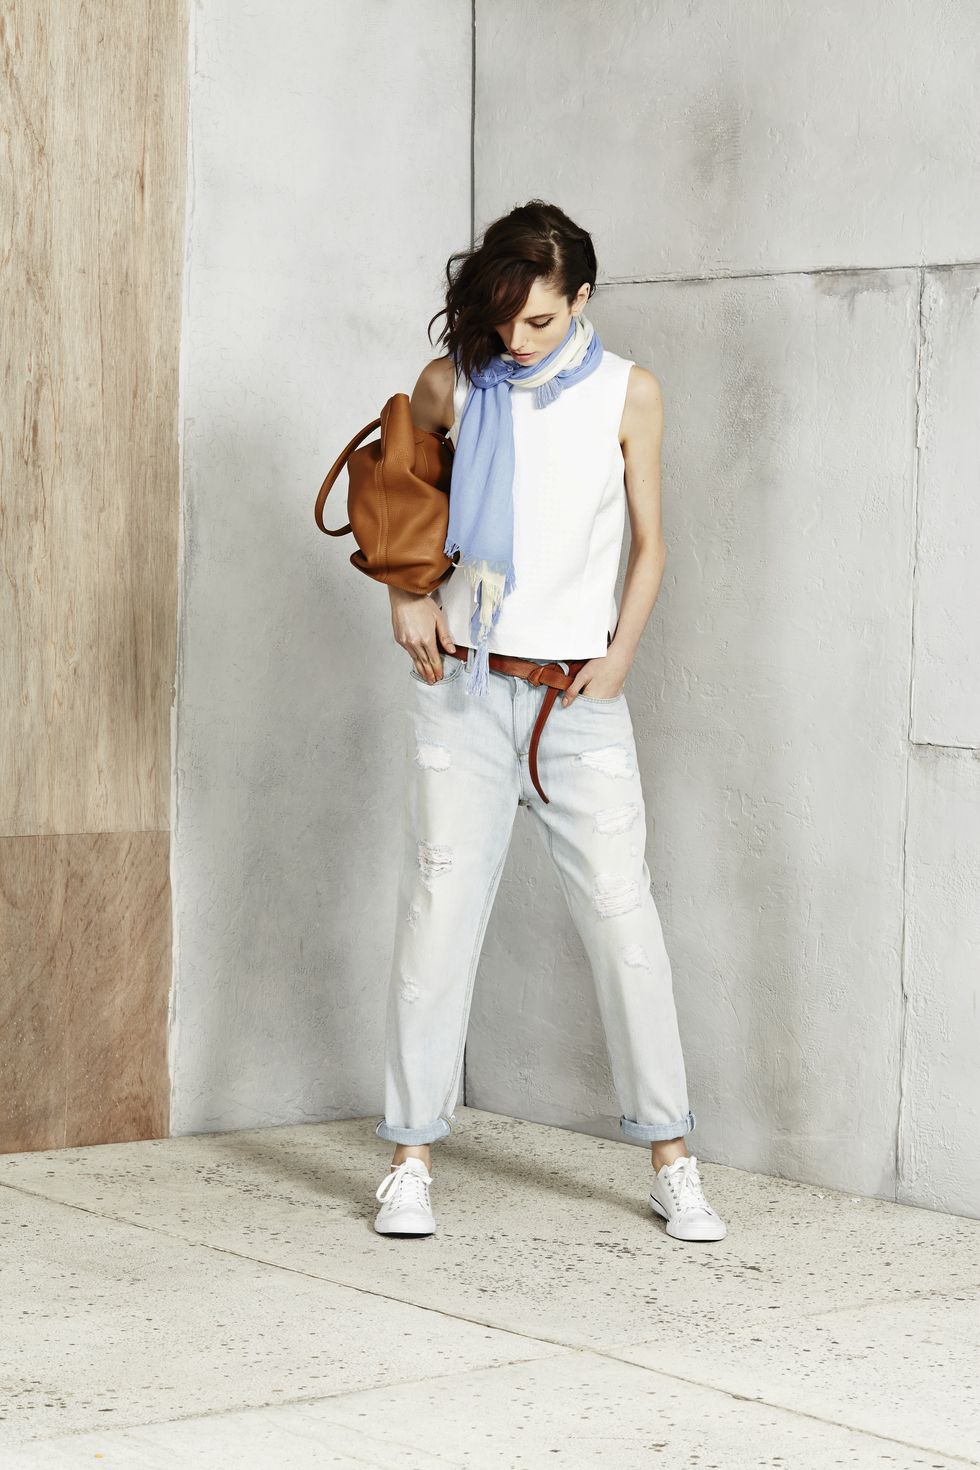 New ways to wear denim for spring: white